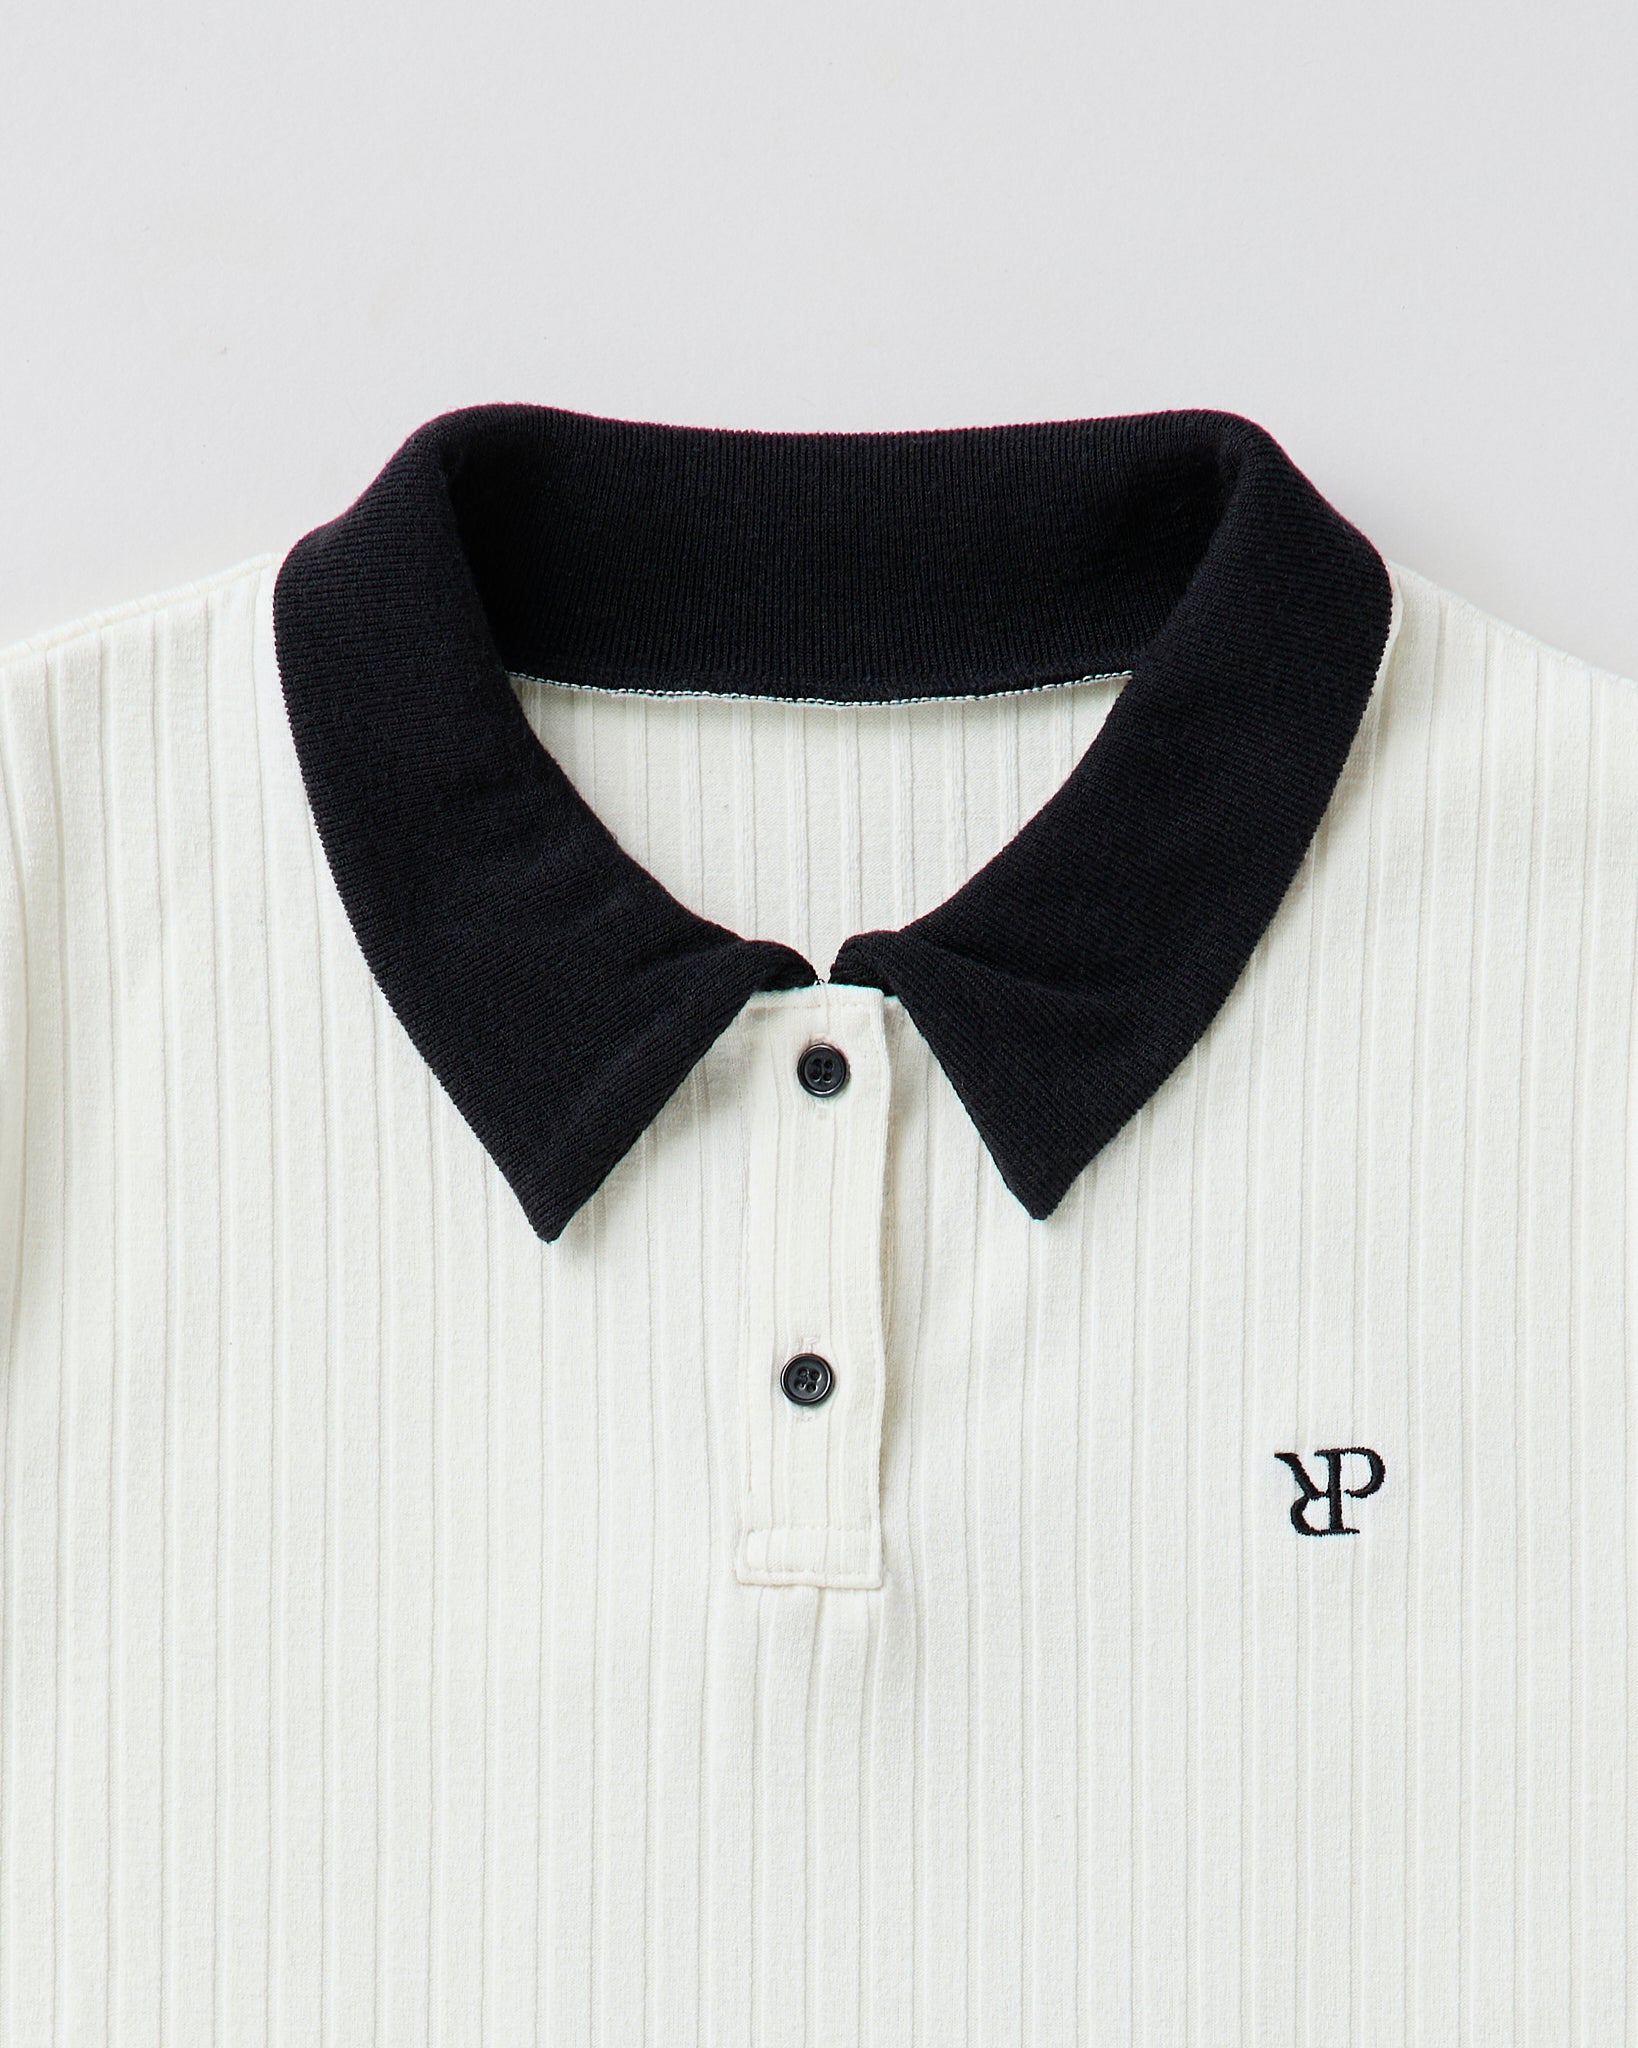 Ribbon shoulder knit polo shirt (offwhite)